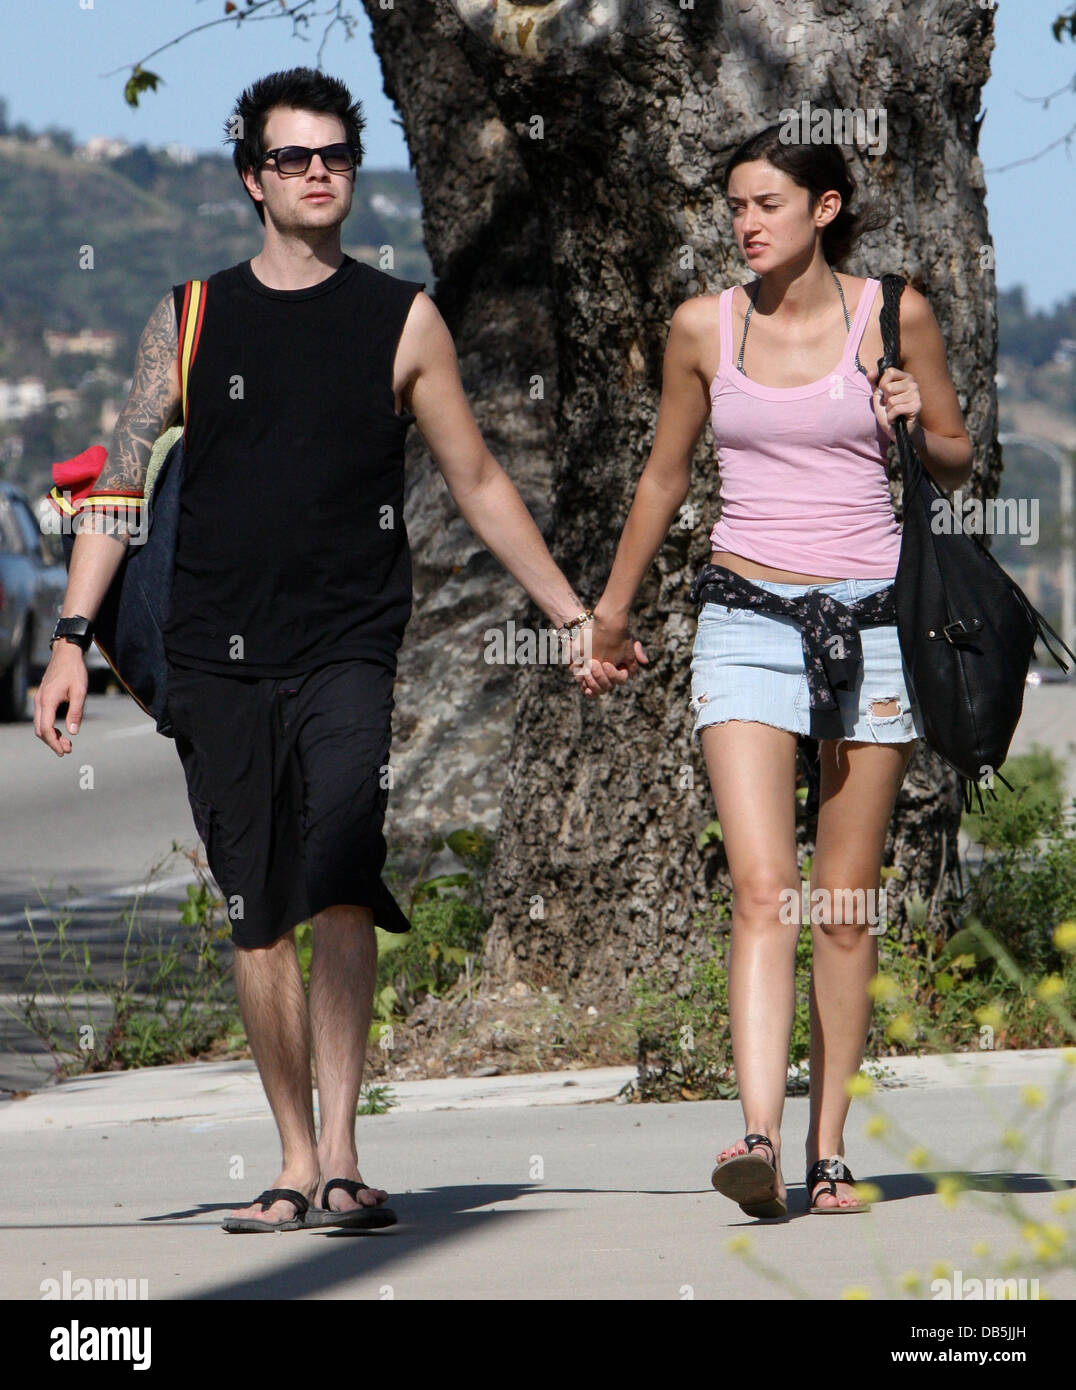 American actress Caroline D'Amore   walking with her boyfriend in Malibu  Los Angeles, California - 30.04.11 Stock Photo